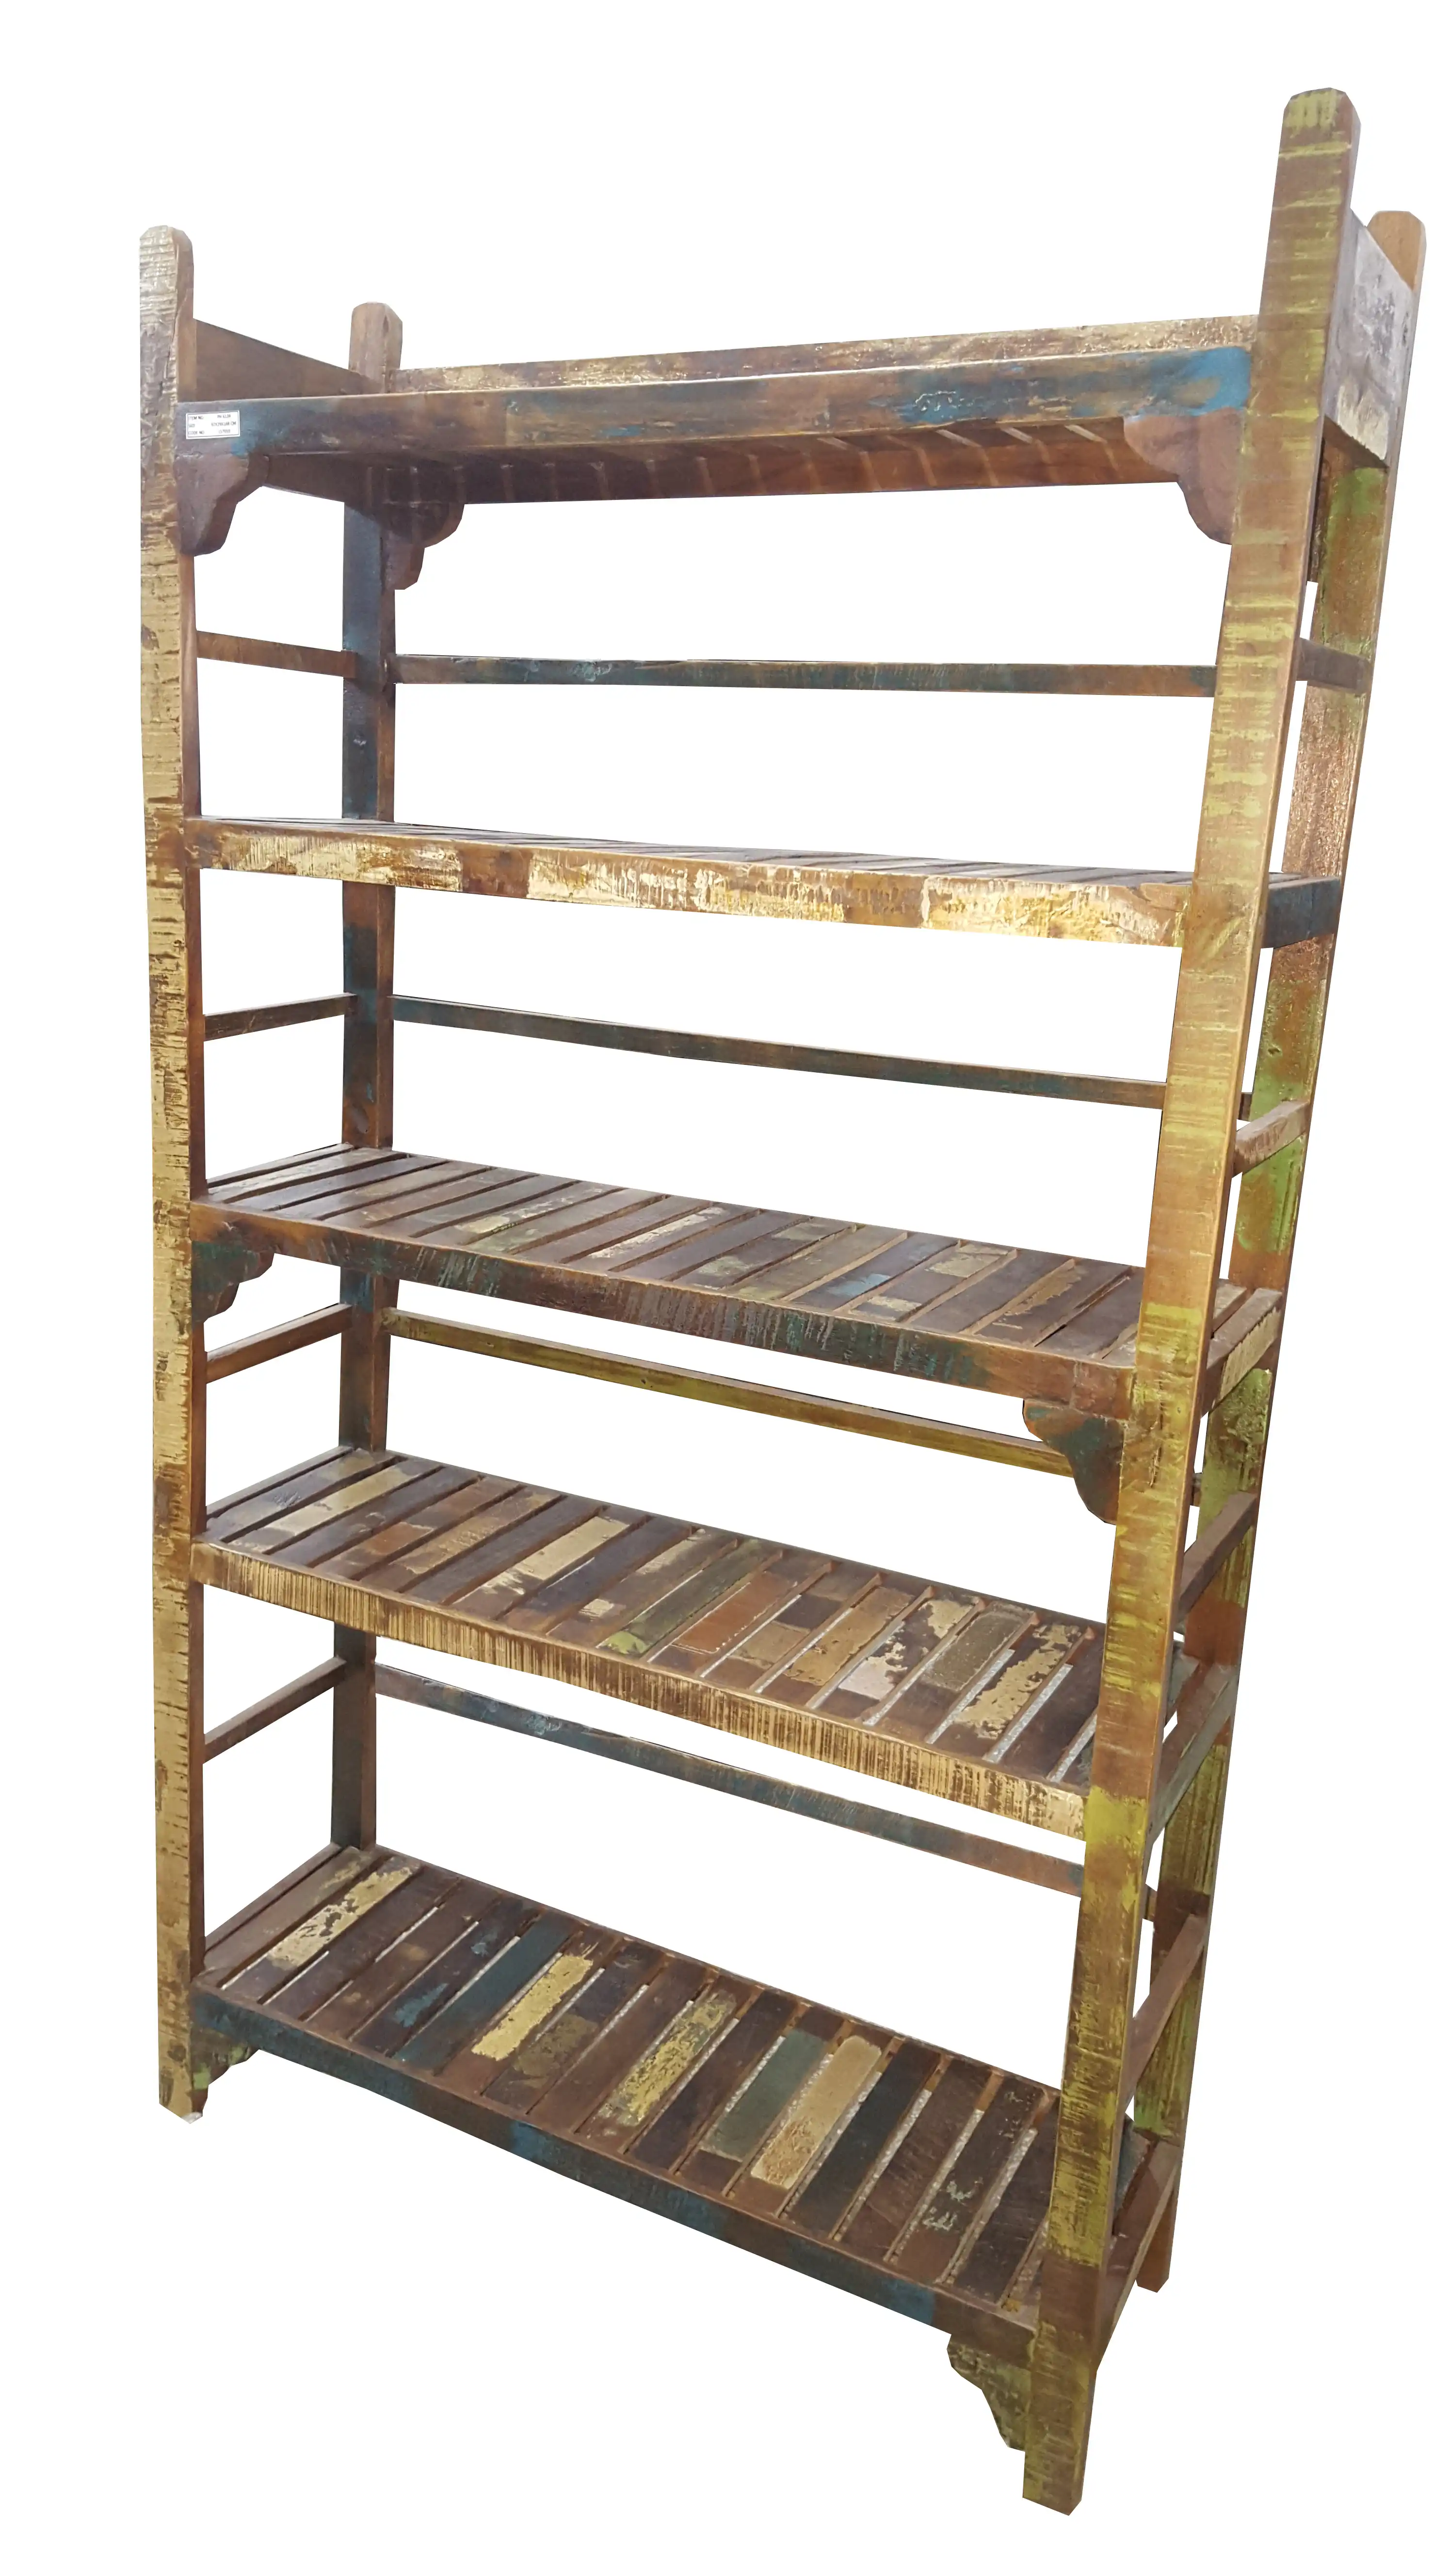 Reclaimed Wood Bookshelf with 5 Shelves - popular handicrafts